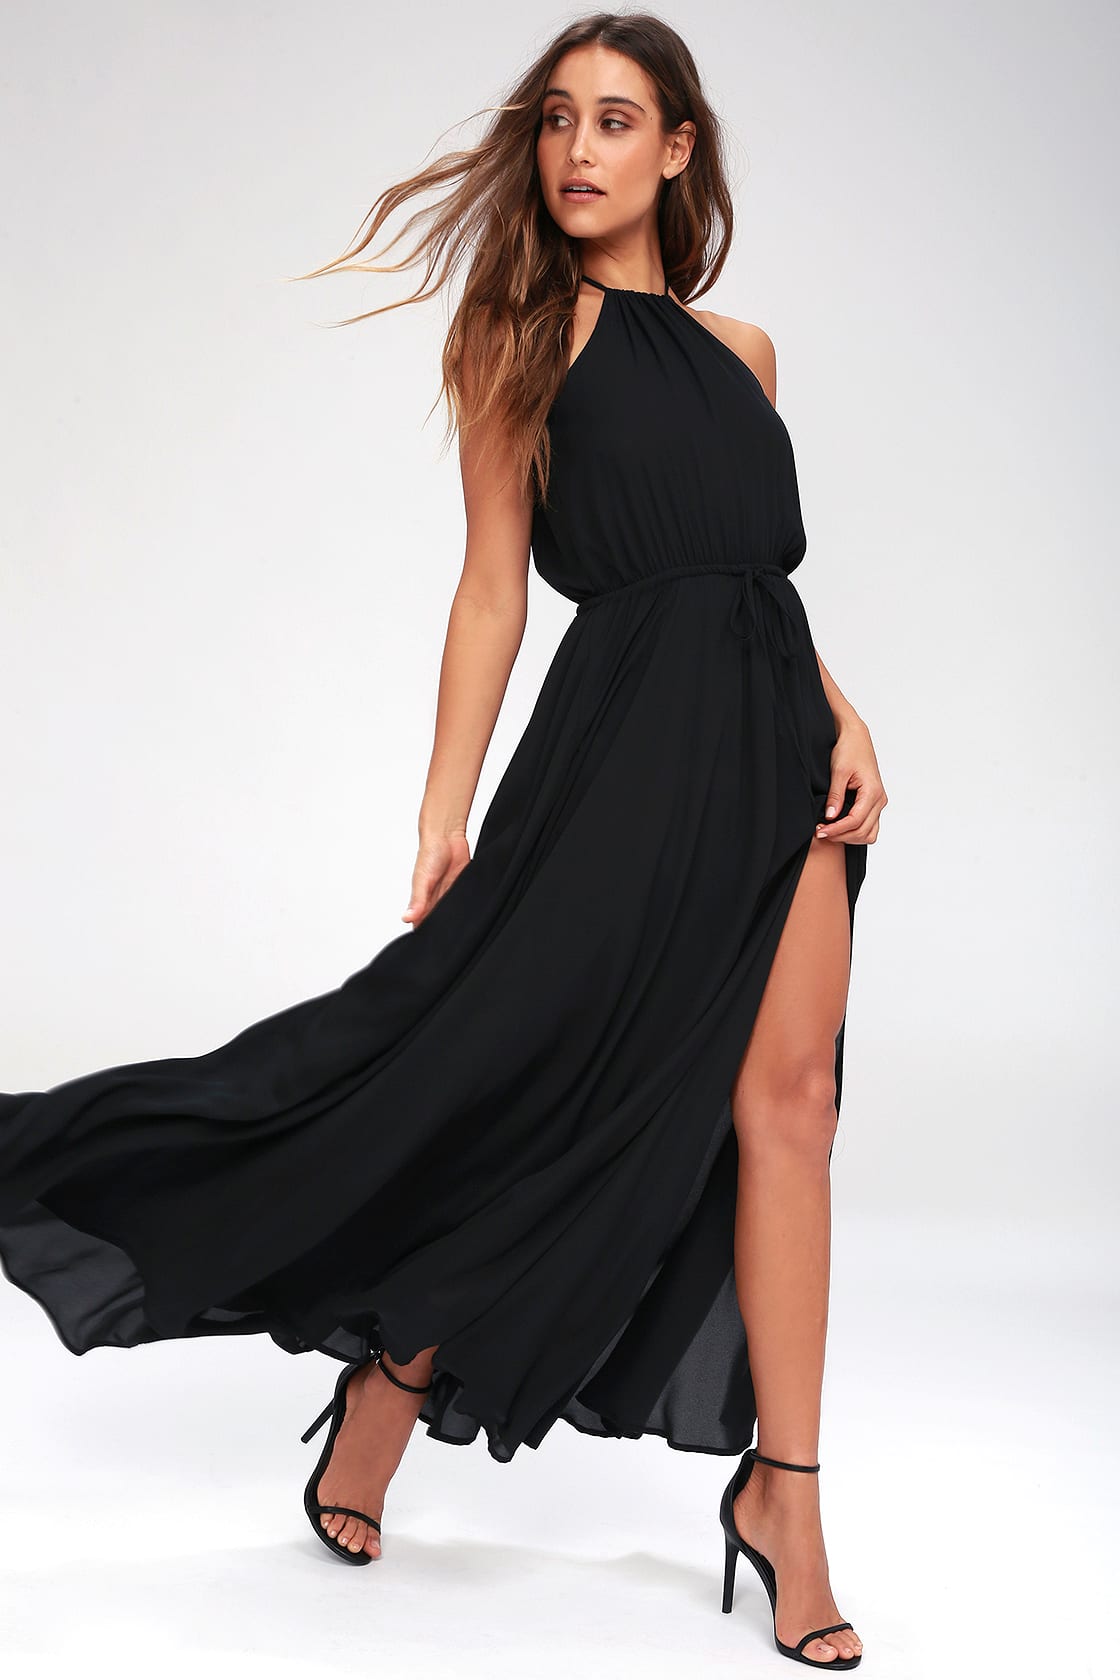 Essence of Style Black Maxi Dress